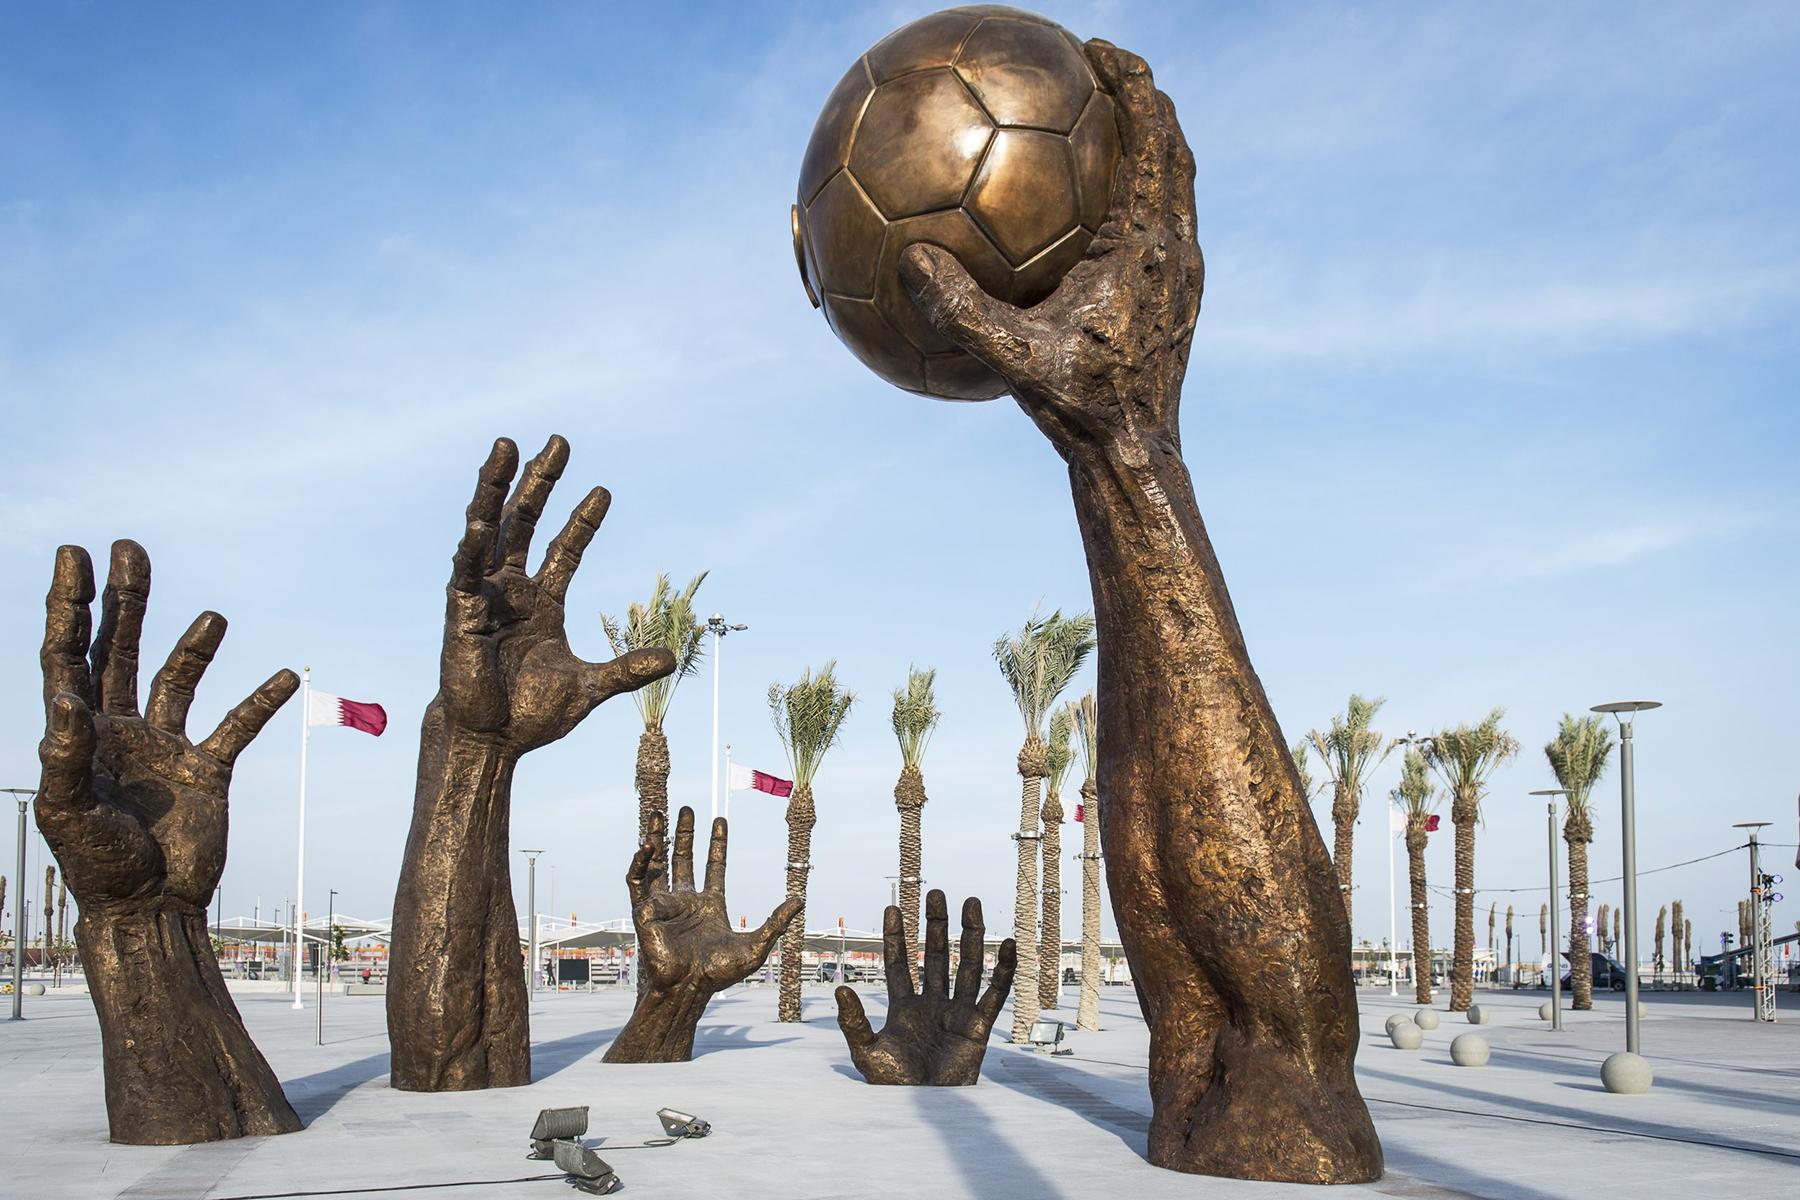 Qatar Museums celebrates the public art scene